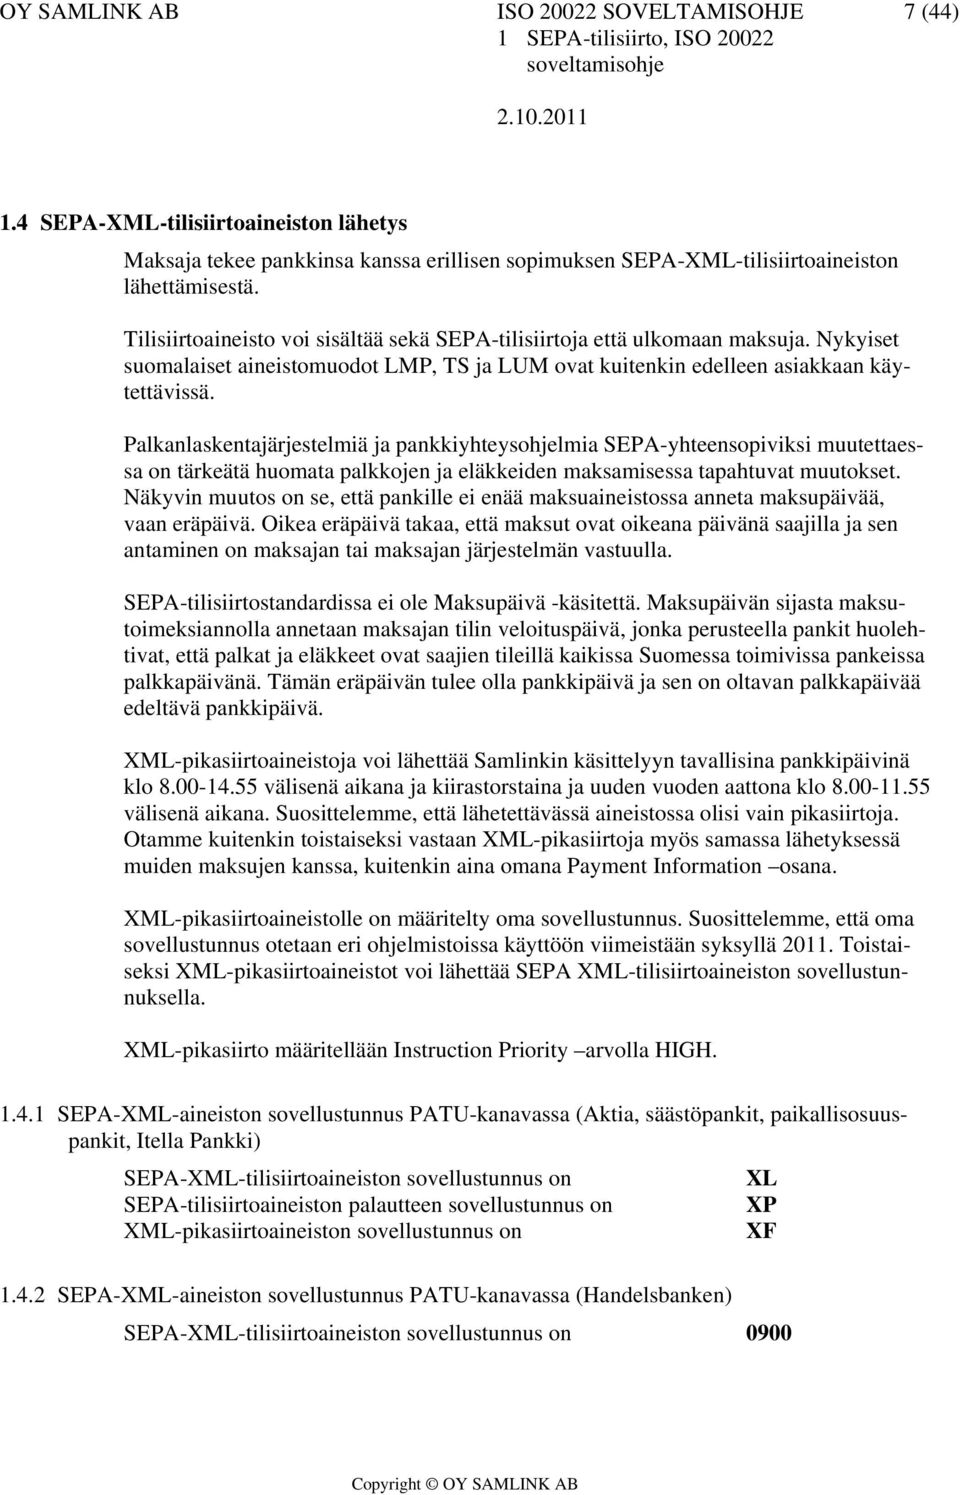 SEPA-TILISIIRTO ISO SOVELTAMISOHJE - PDF Free Download